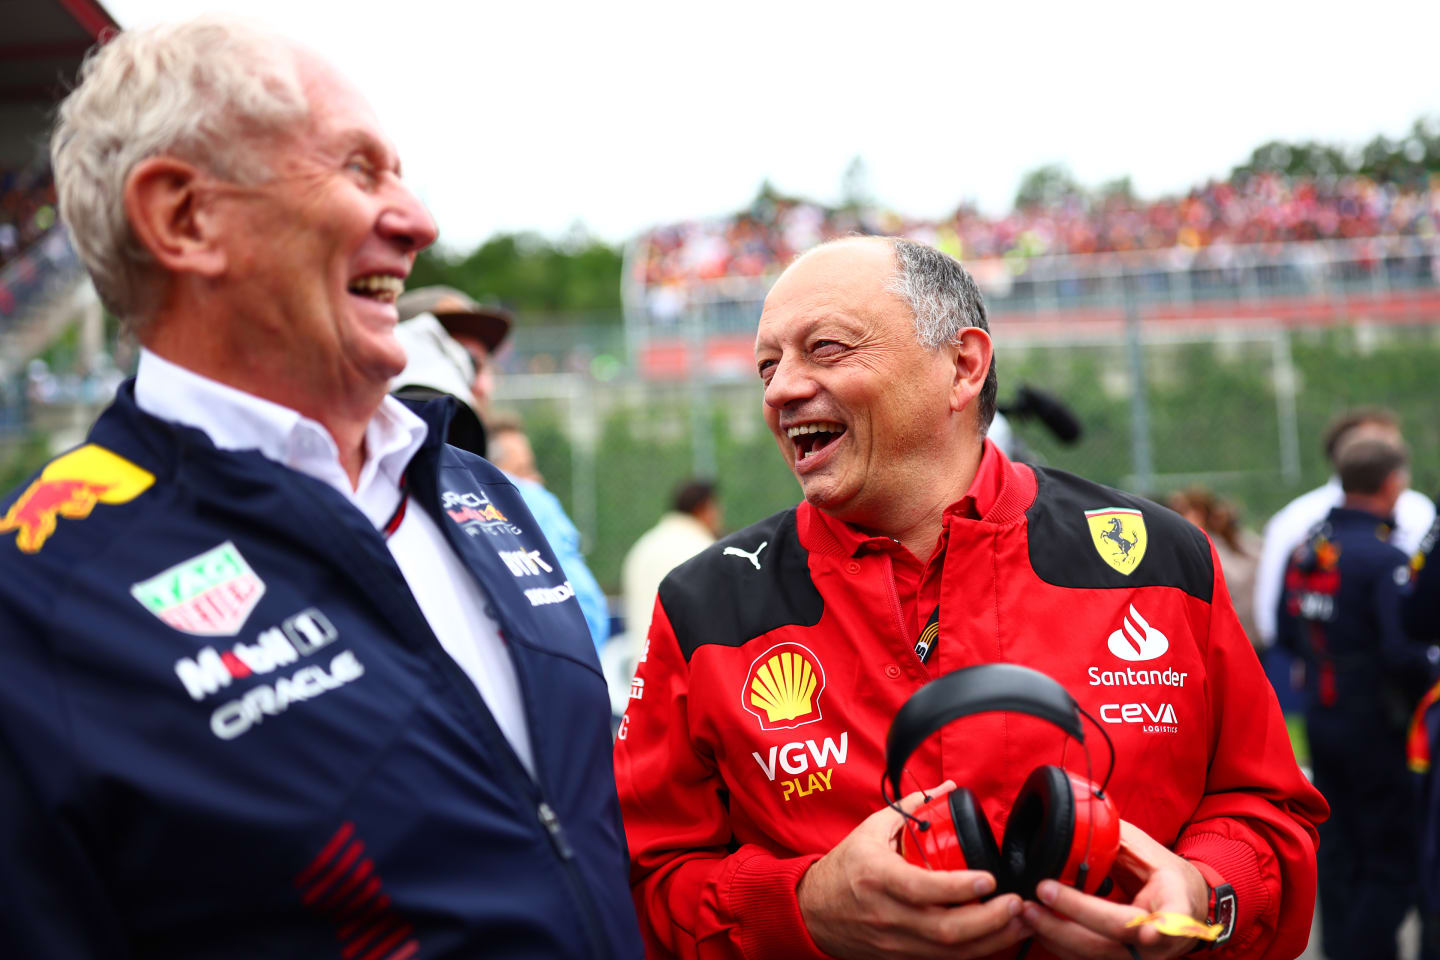 SPA, BELGIUM - JULY 30: Ferrari Team Principal Frederic Vasseur talks with Red Bull Racing Team